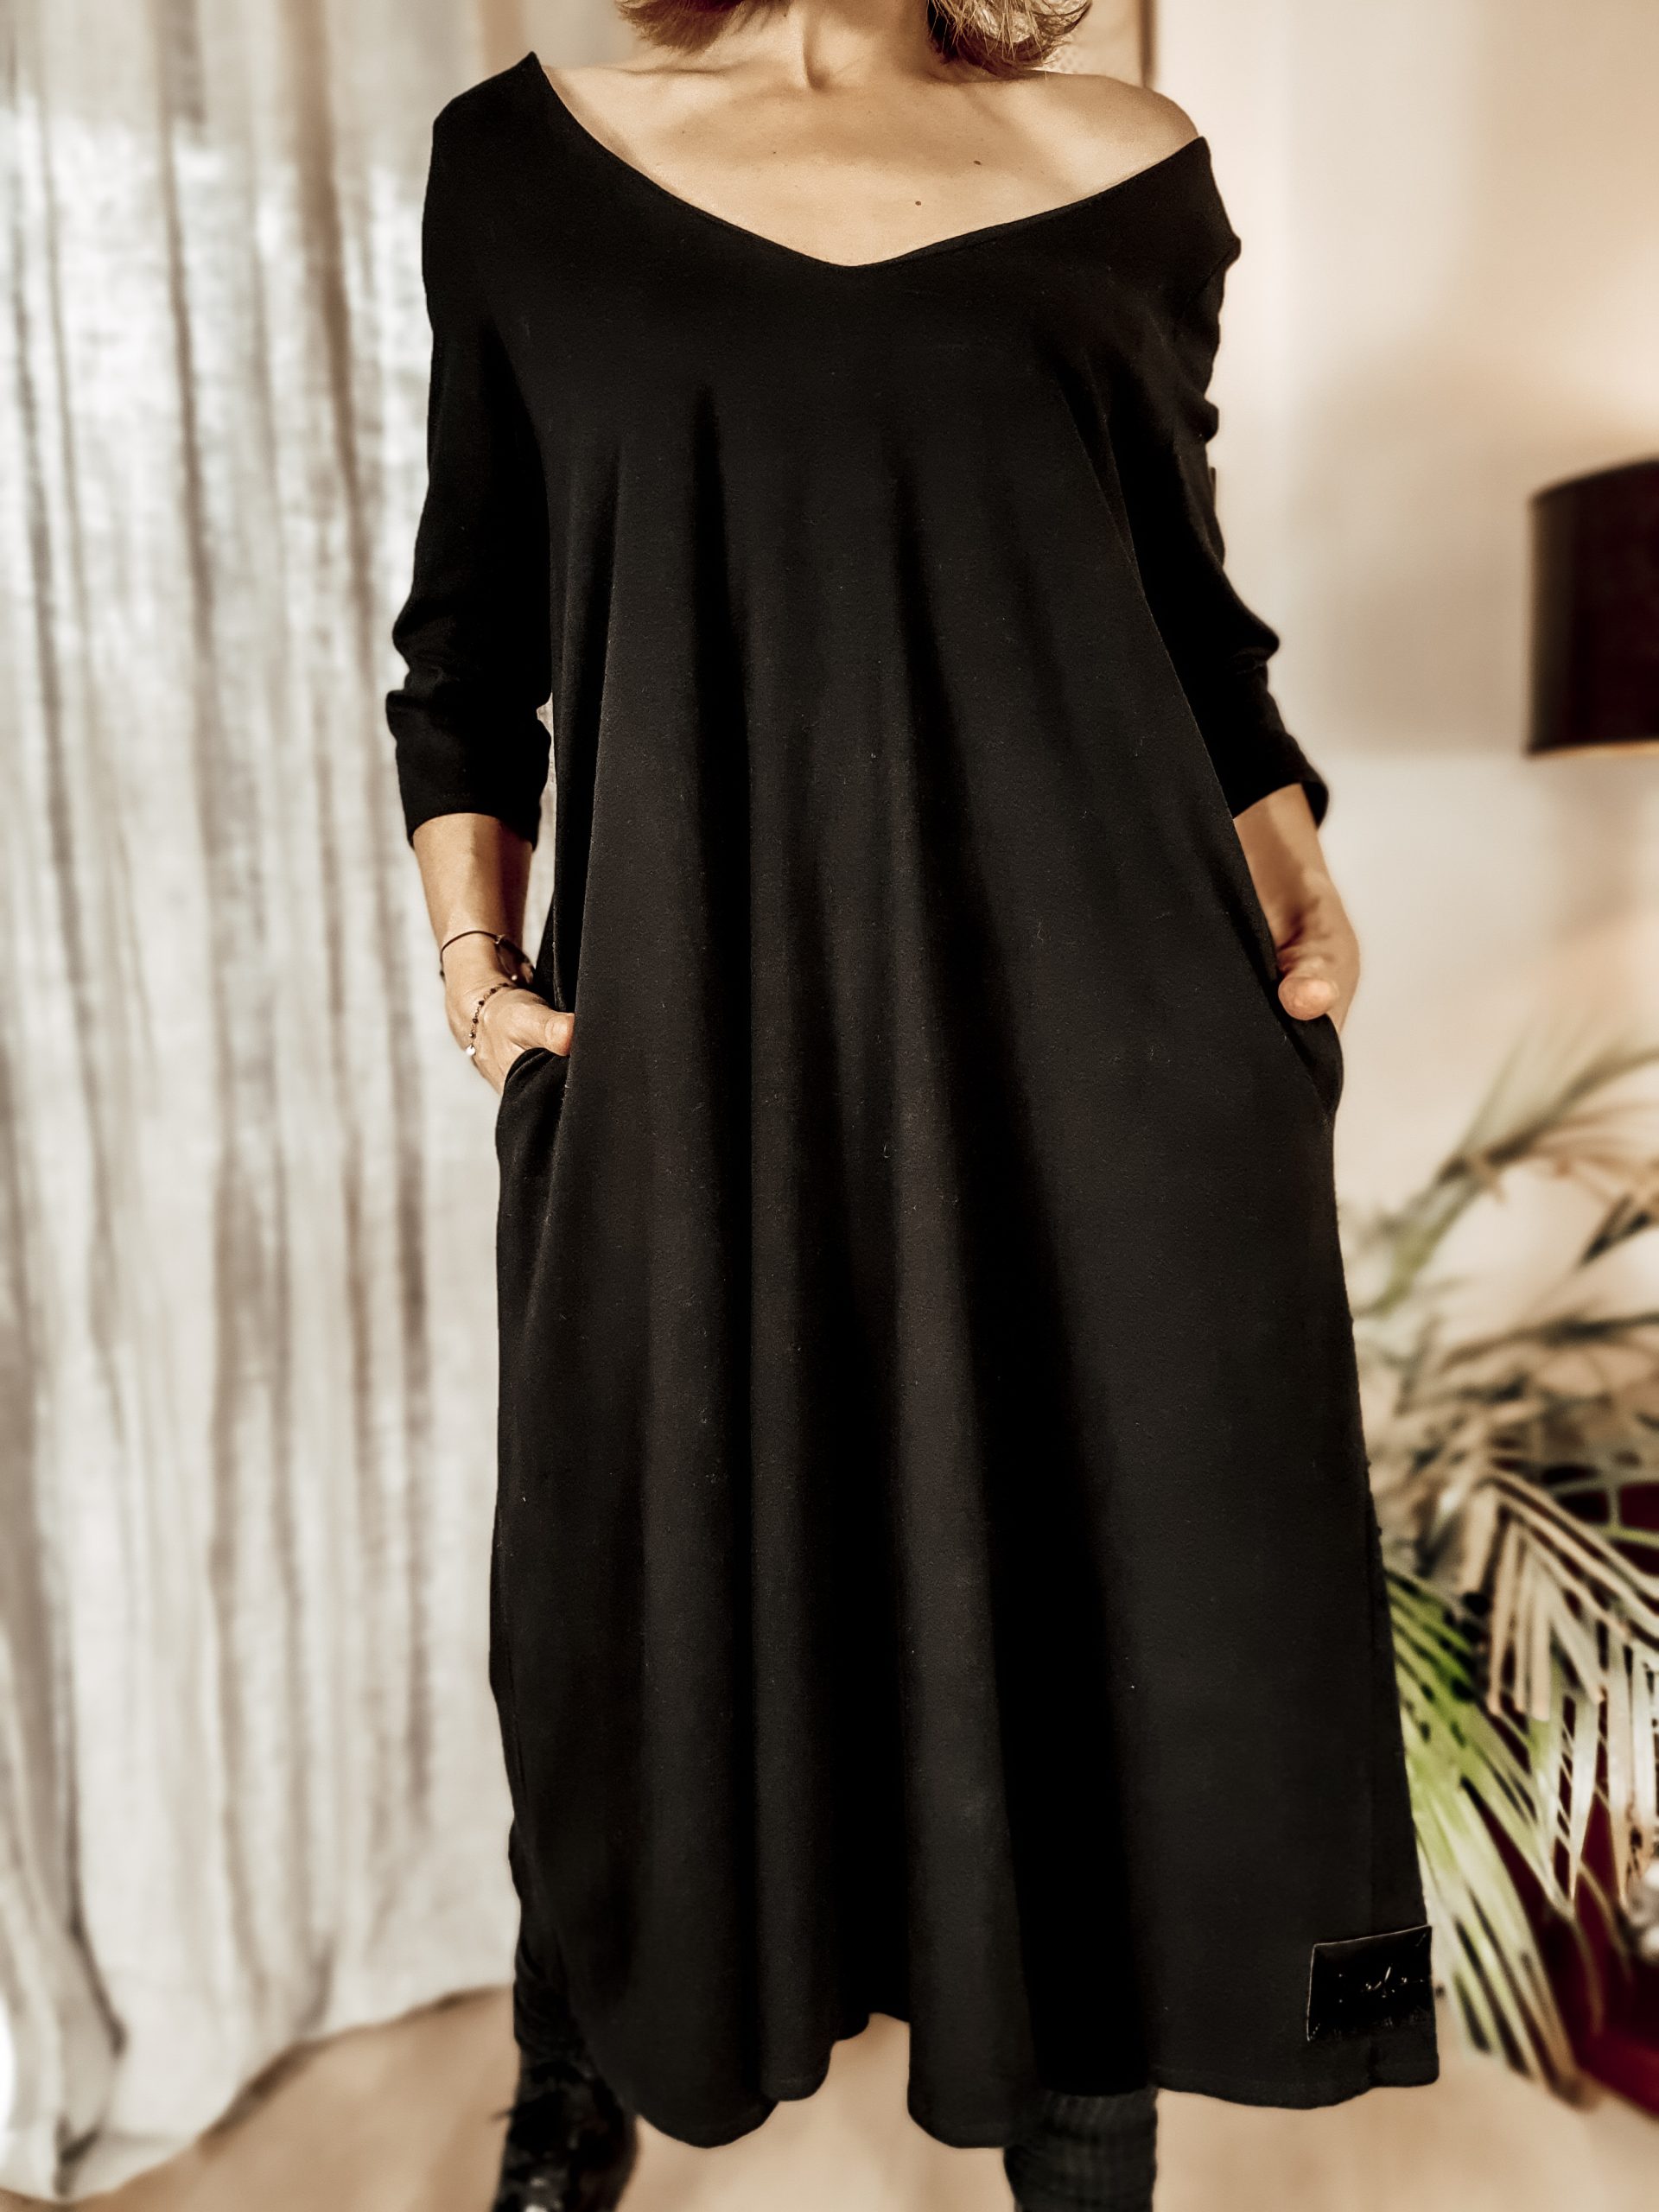 Moda Autorska Slow Fashion BezAle - bezale sukienka kusicielka 1 scaled